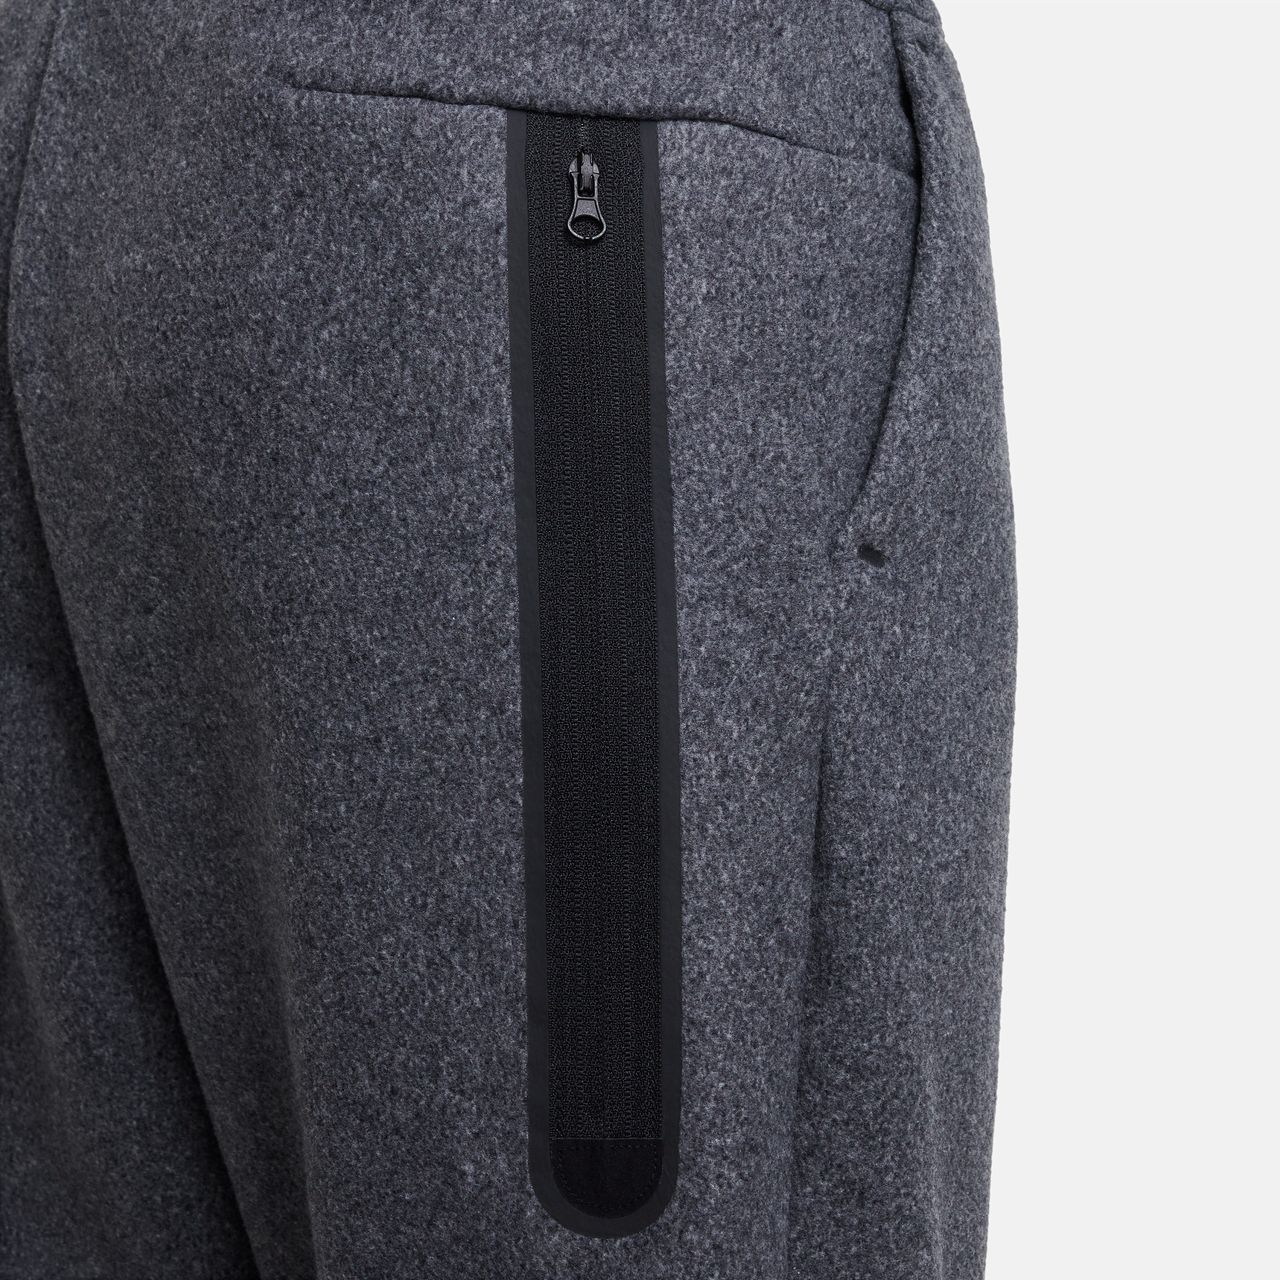 Nike Sportswear Tech Fleece Winterhose für ältere Kinder (Jungen) - Schwarz